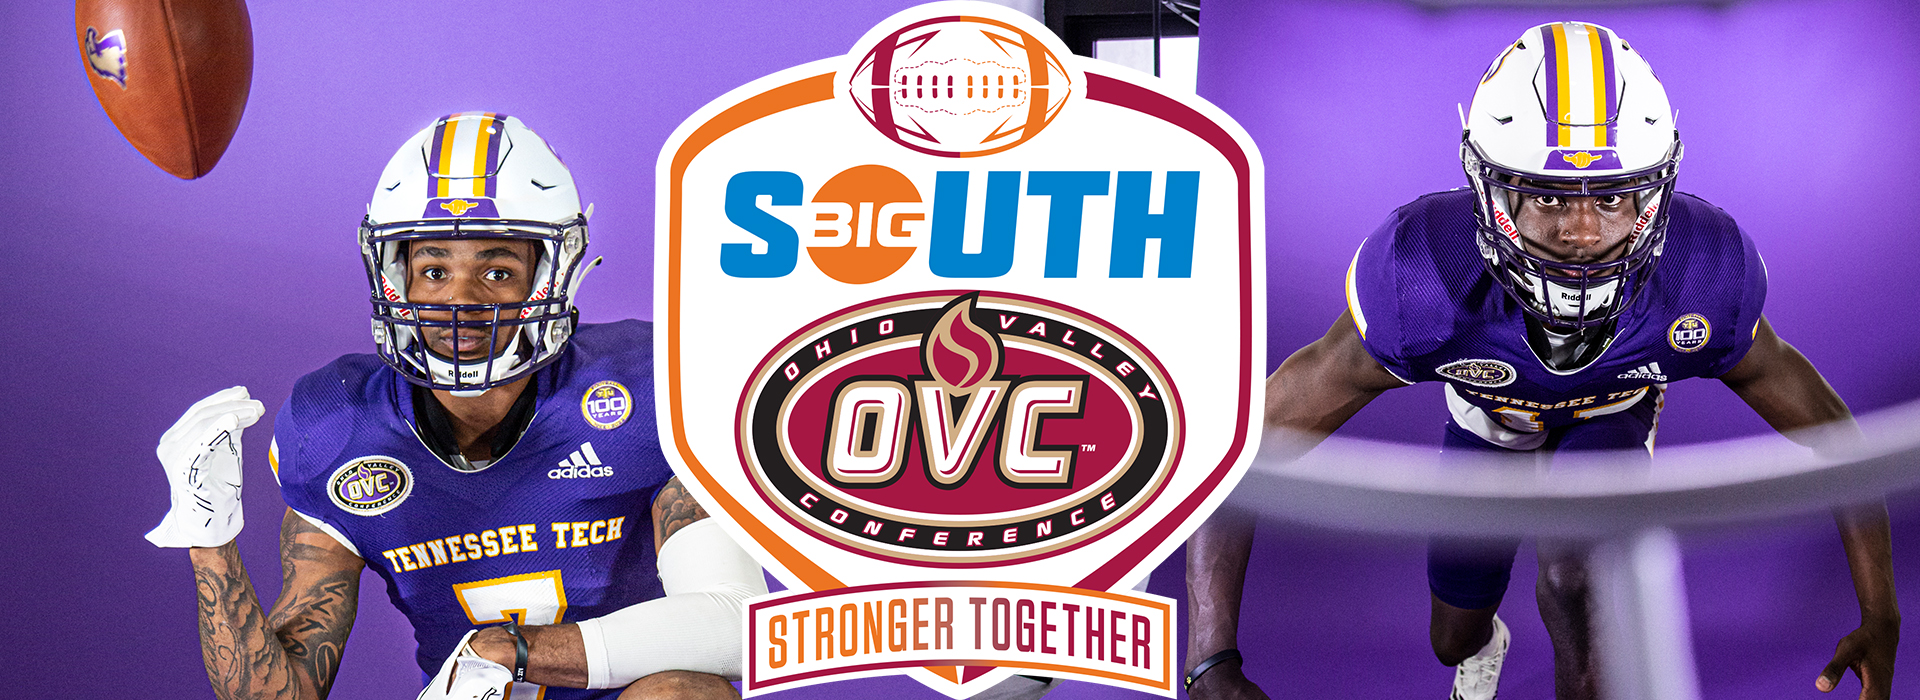 Big South-OVC Football Association unveils logo